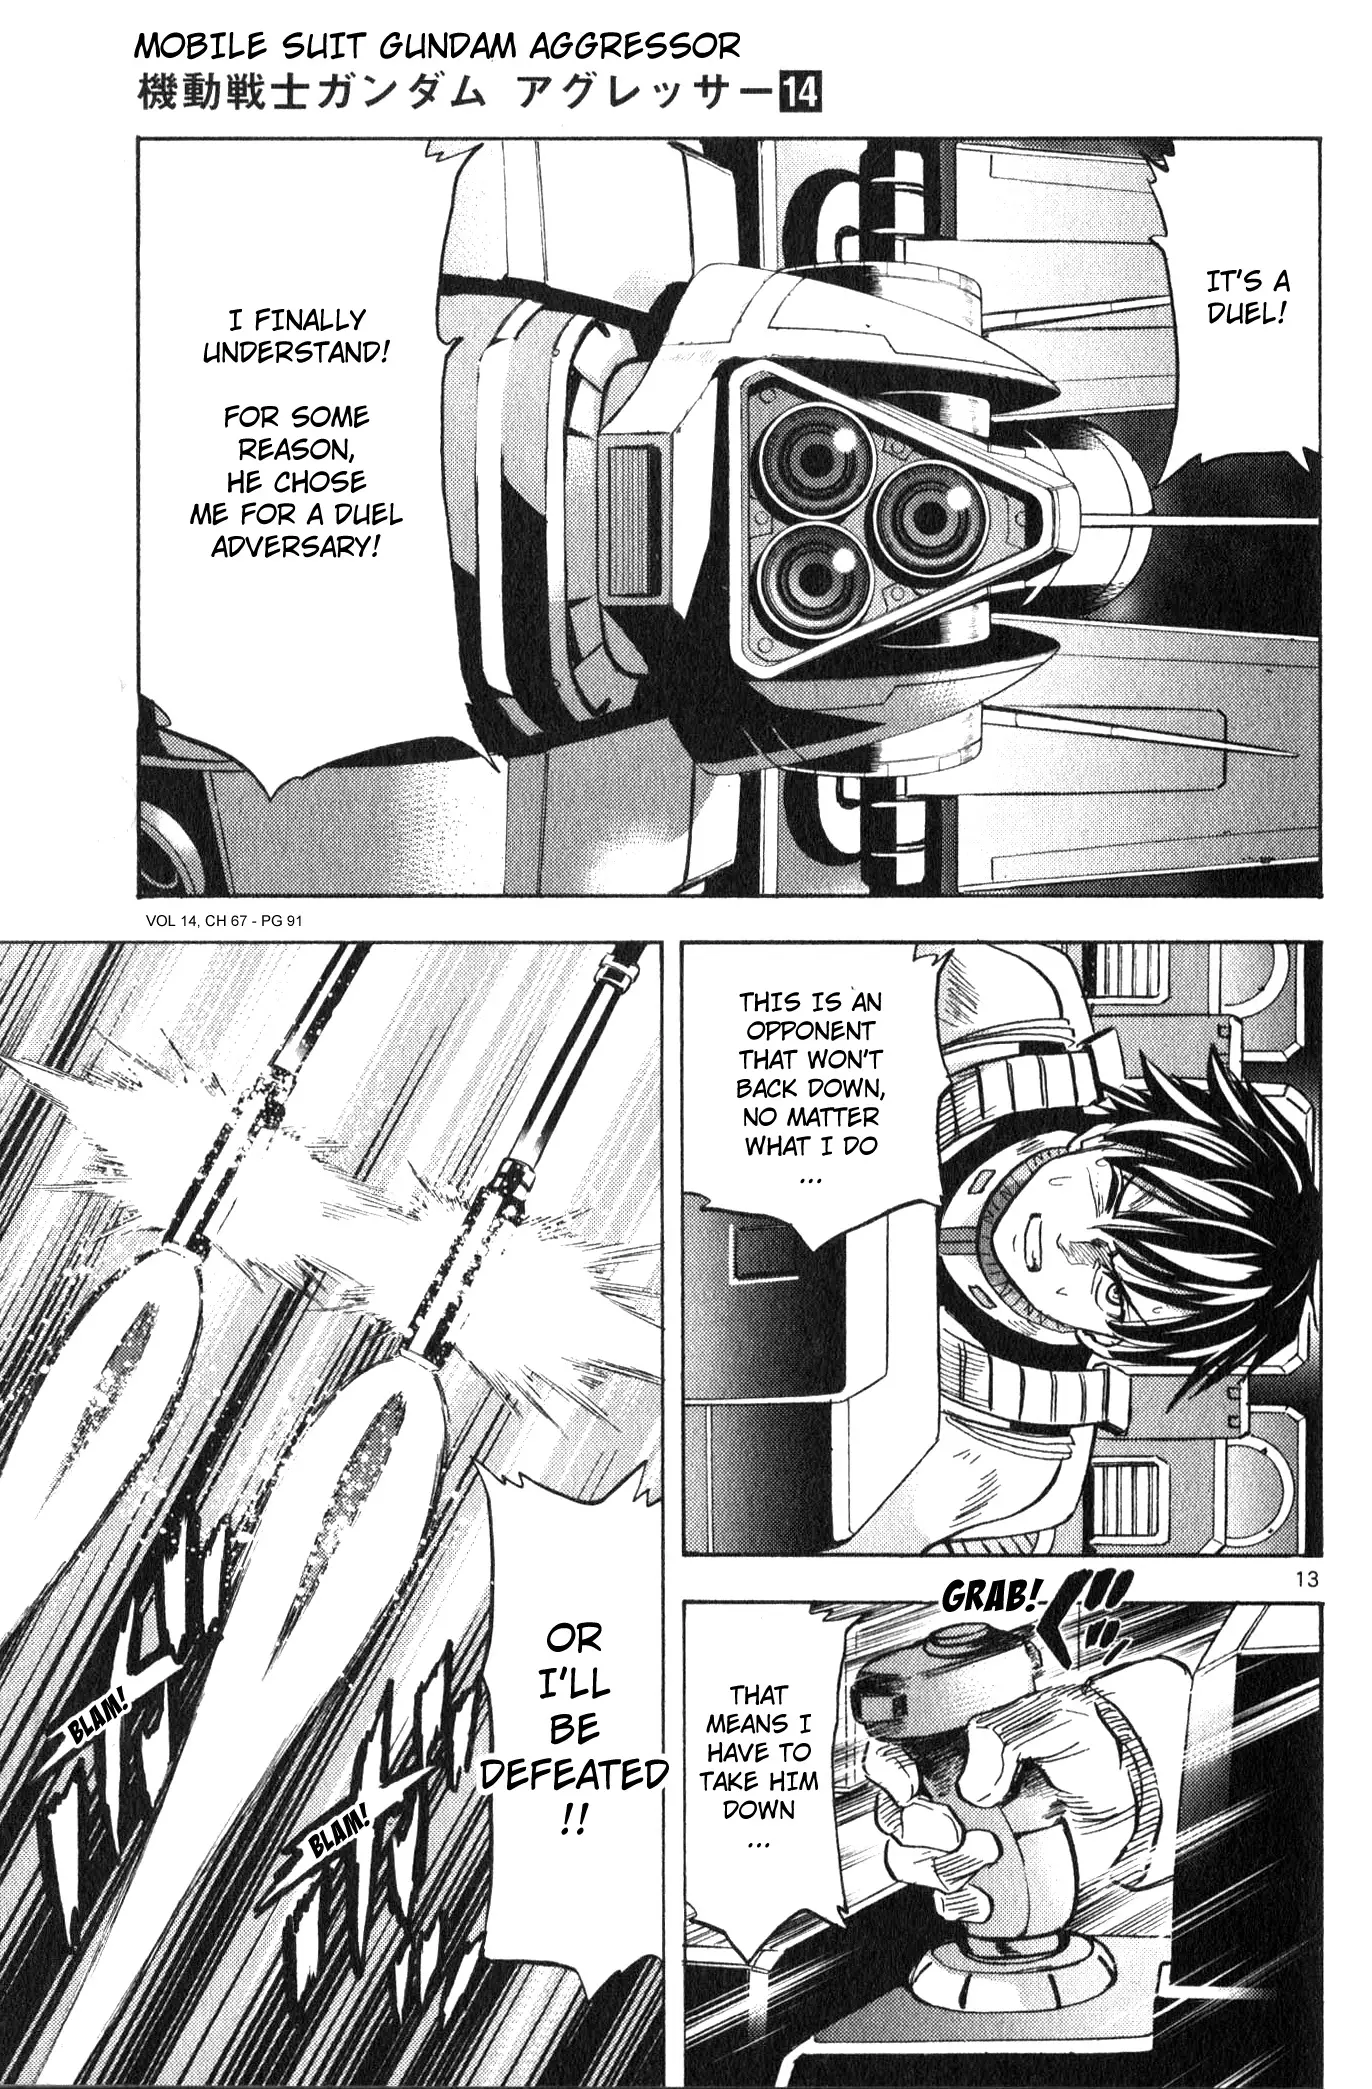 Mobile Suit Gundam Aggressor - 67 page 13-0d3a25e0